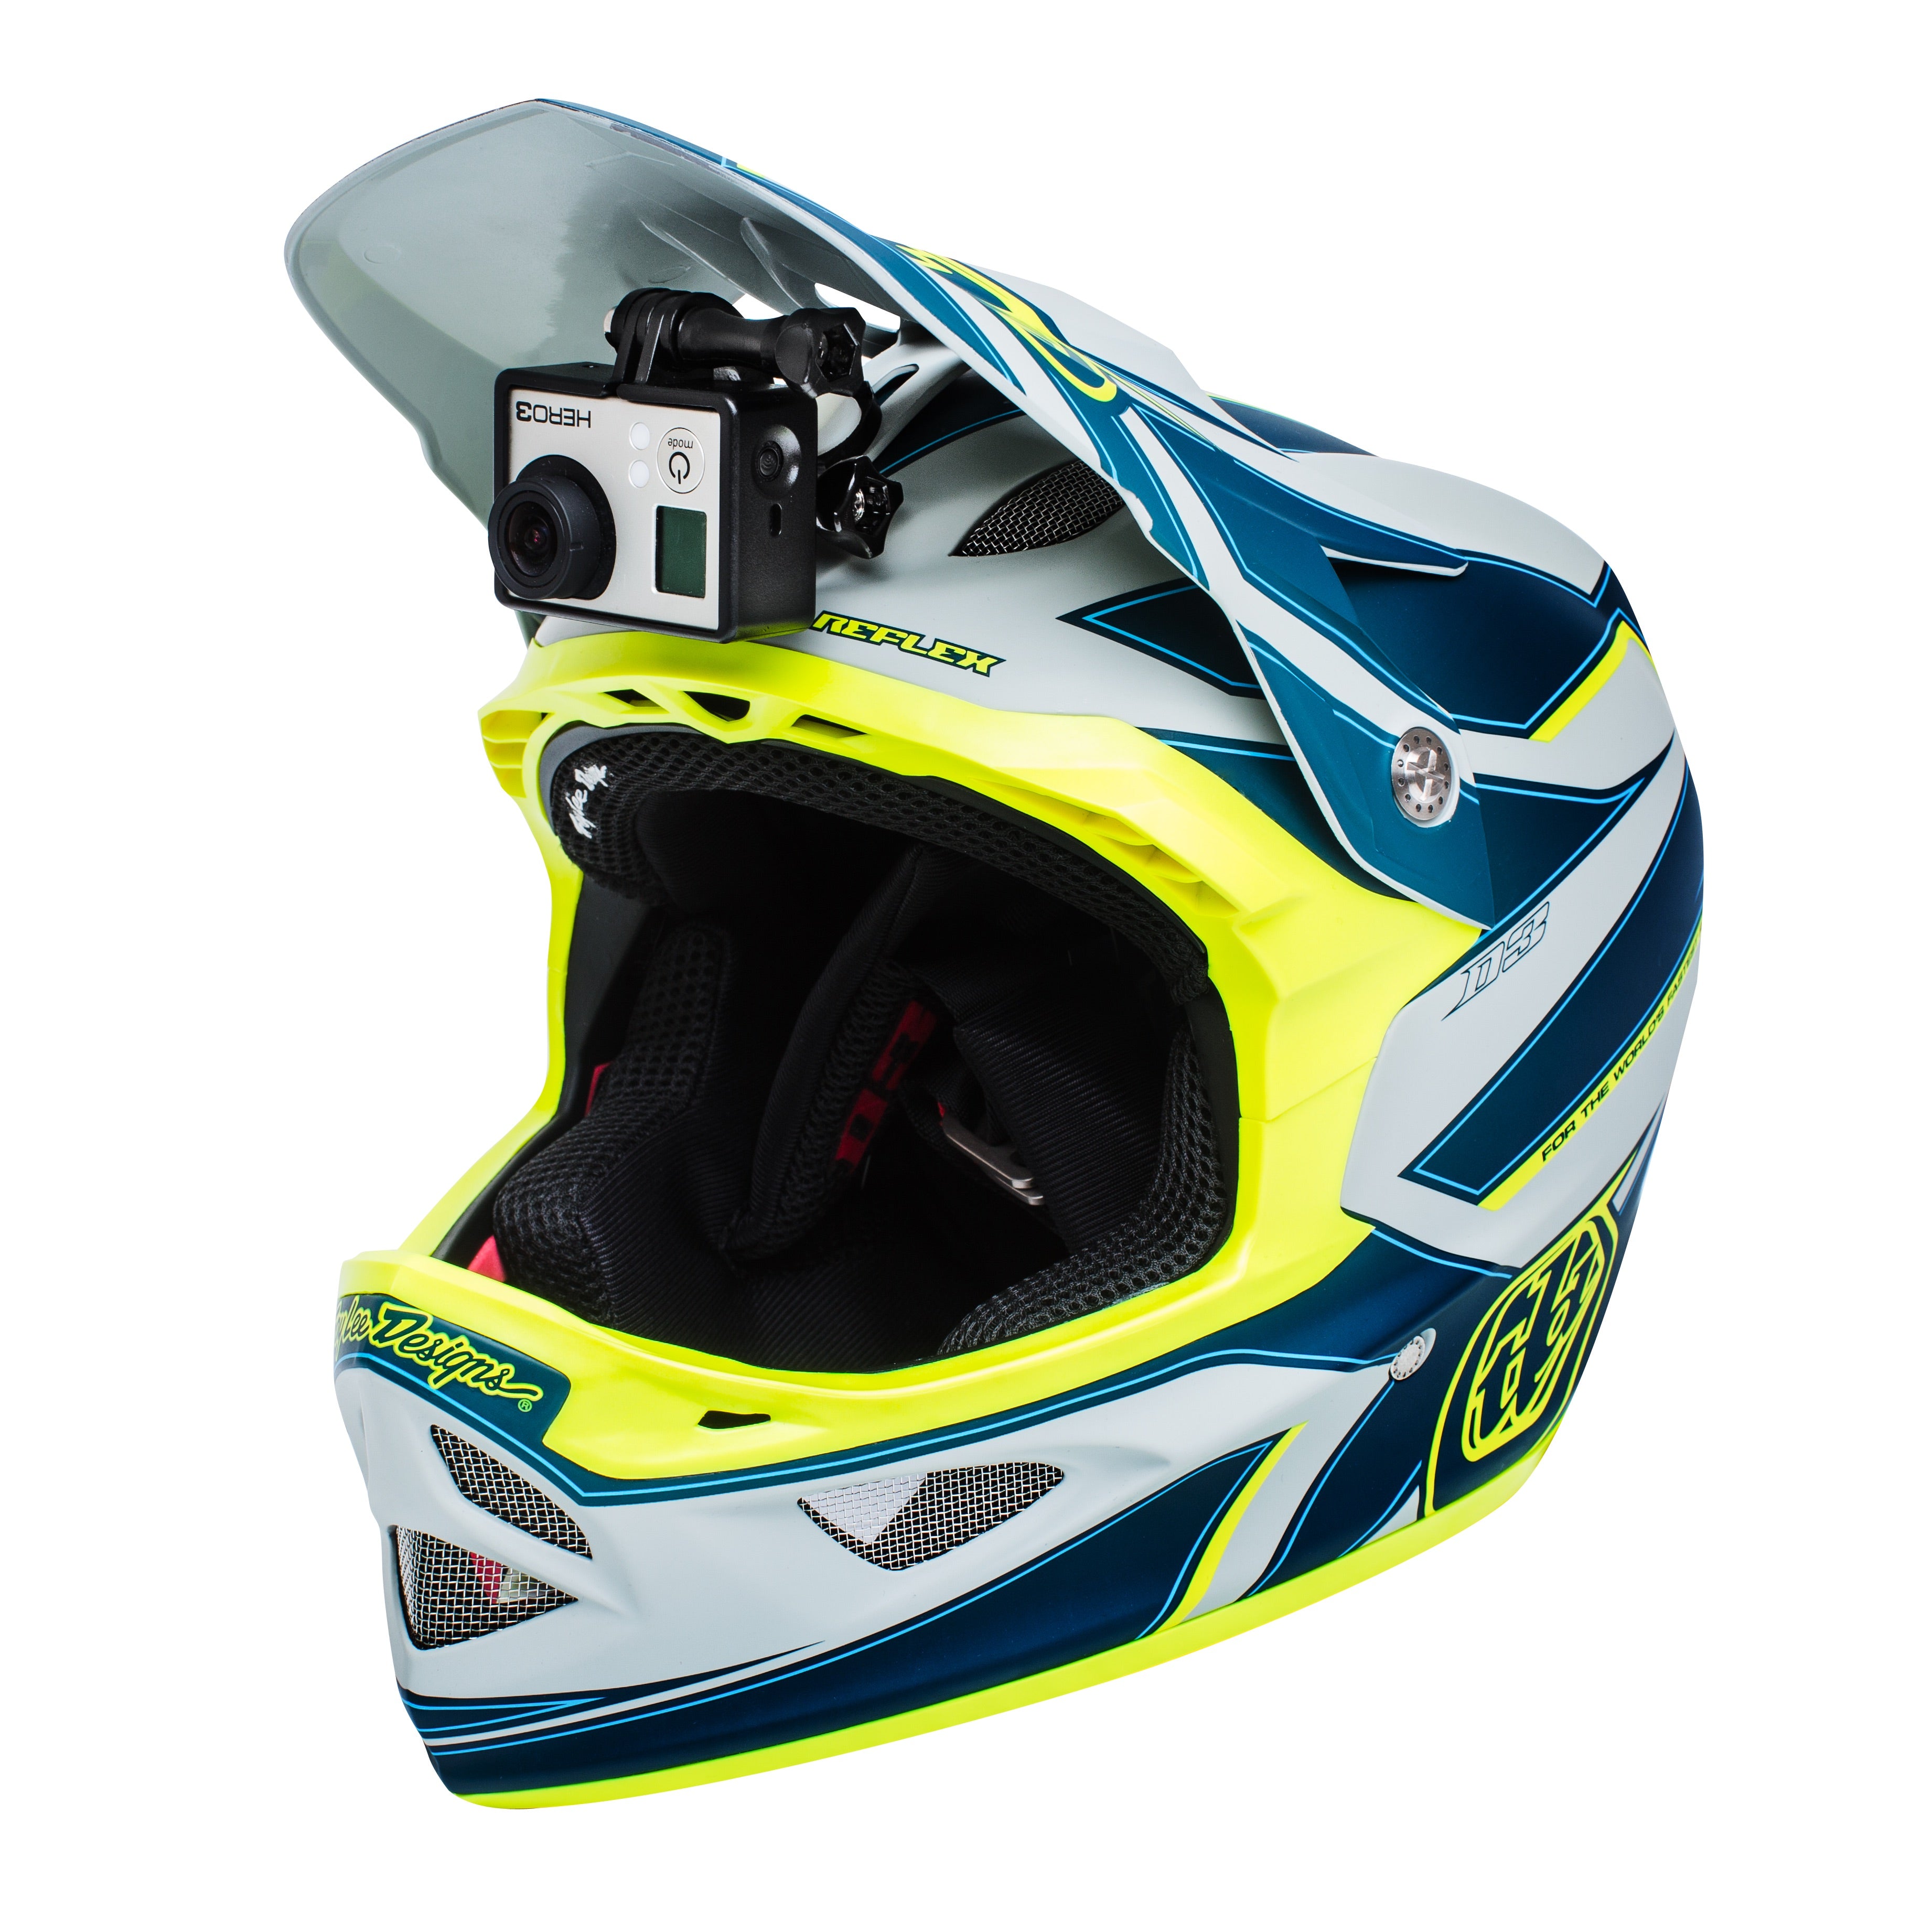 NINJA MOUNT  - the Action Cam Mount for Fullface Helmets (Standard Version)